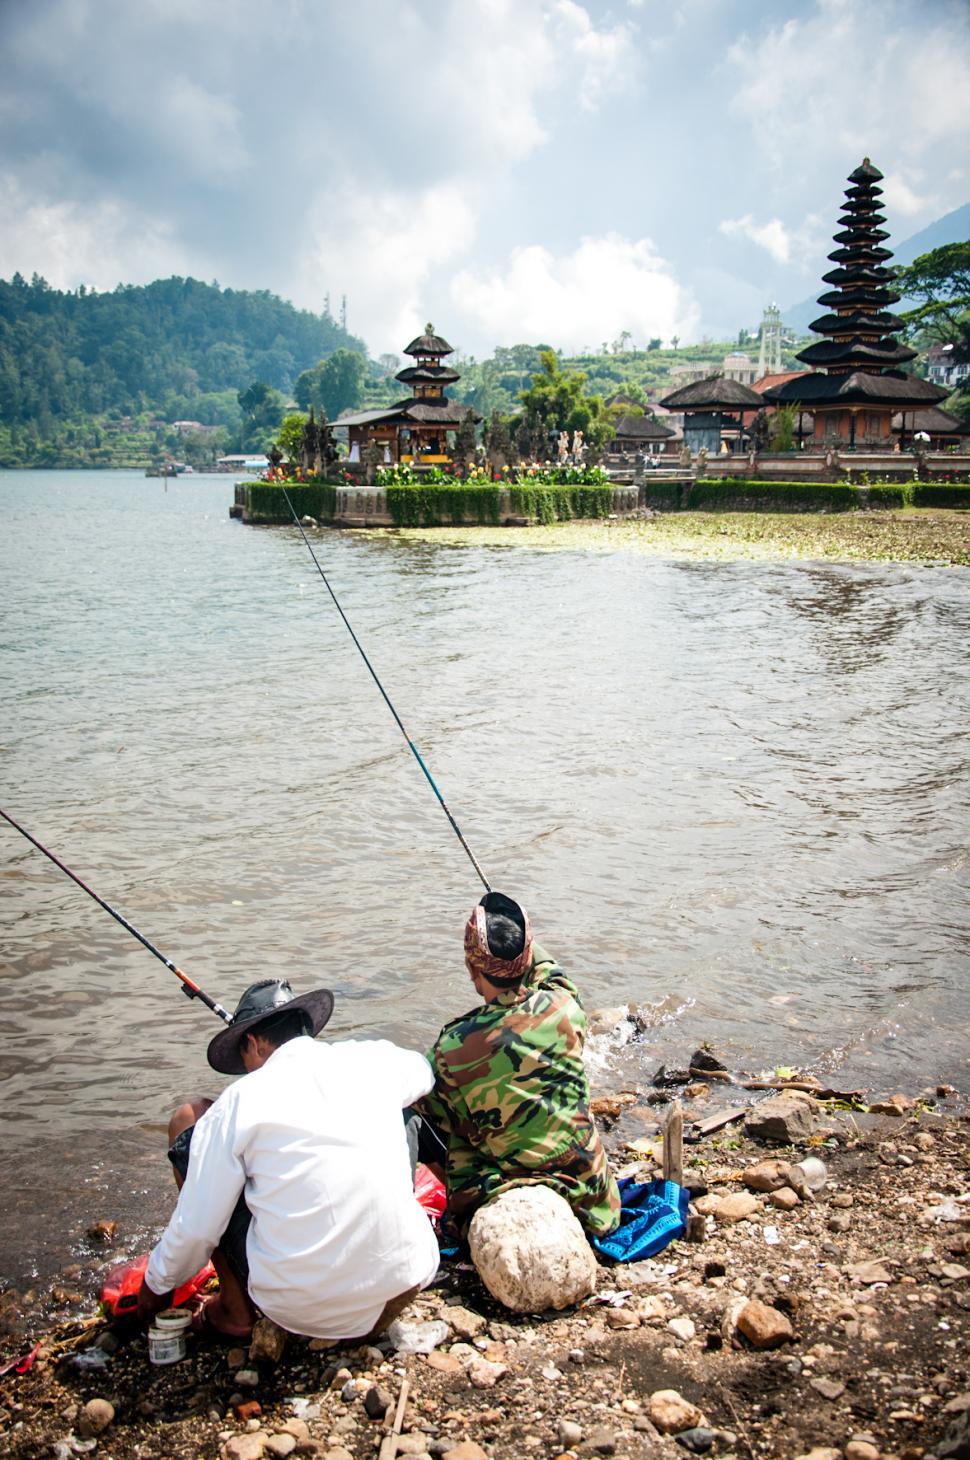 Free Image of Fishermen in Bali 